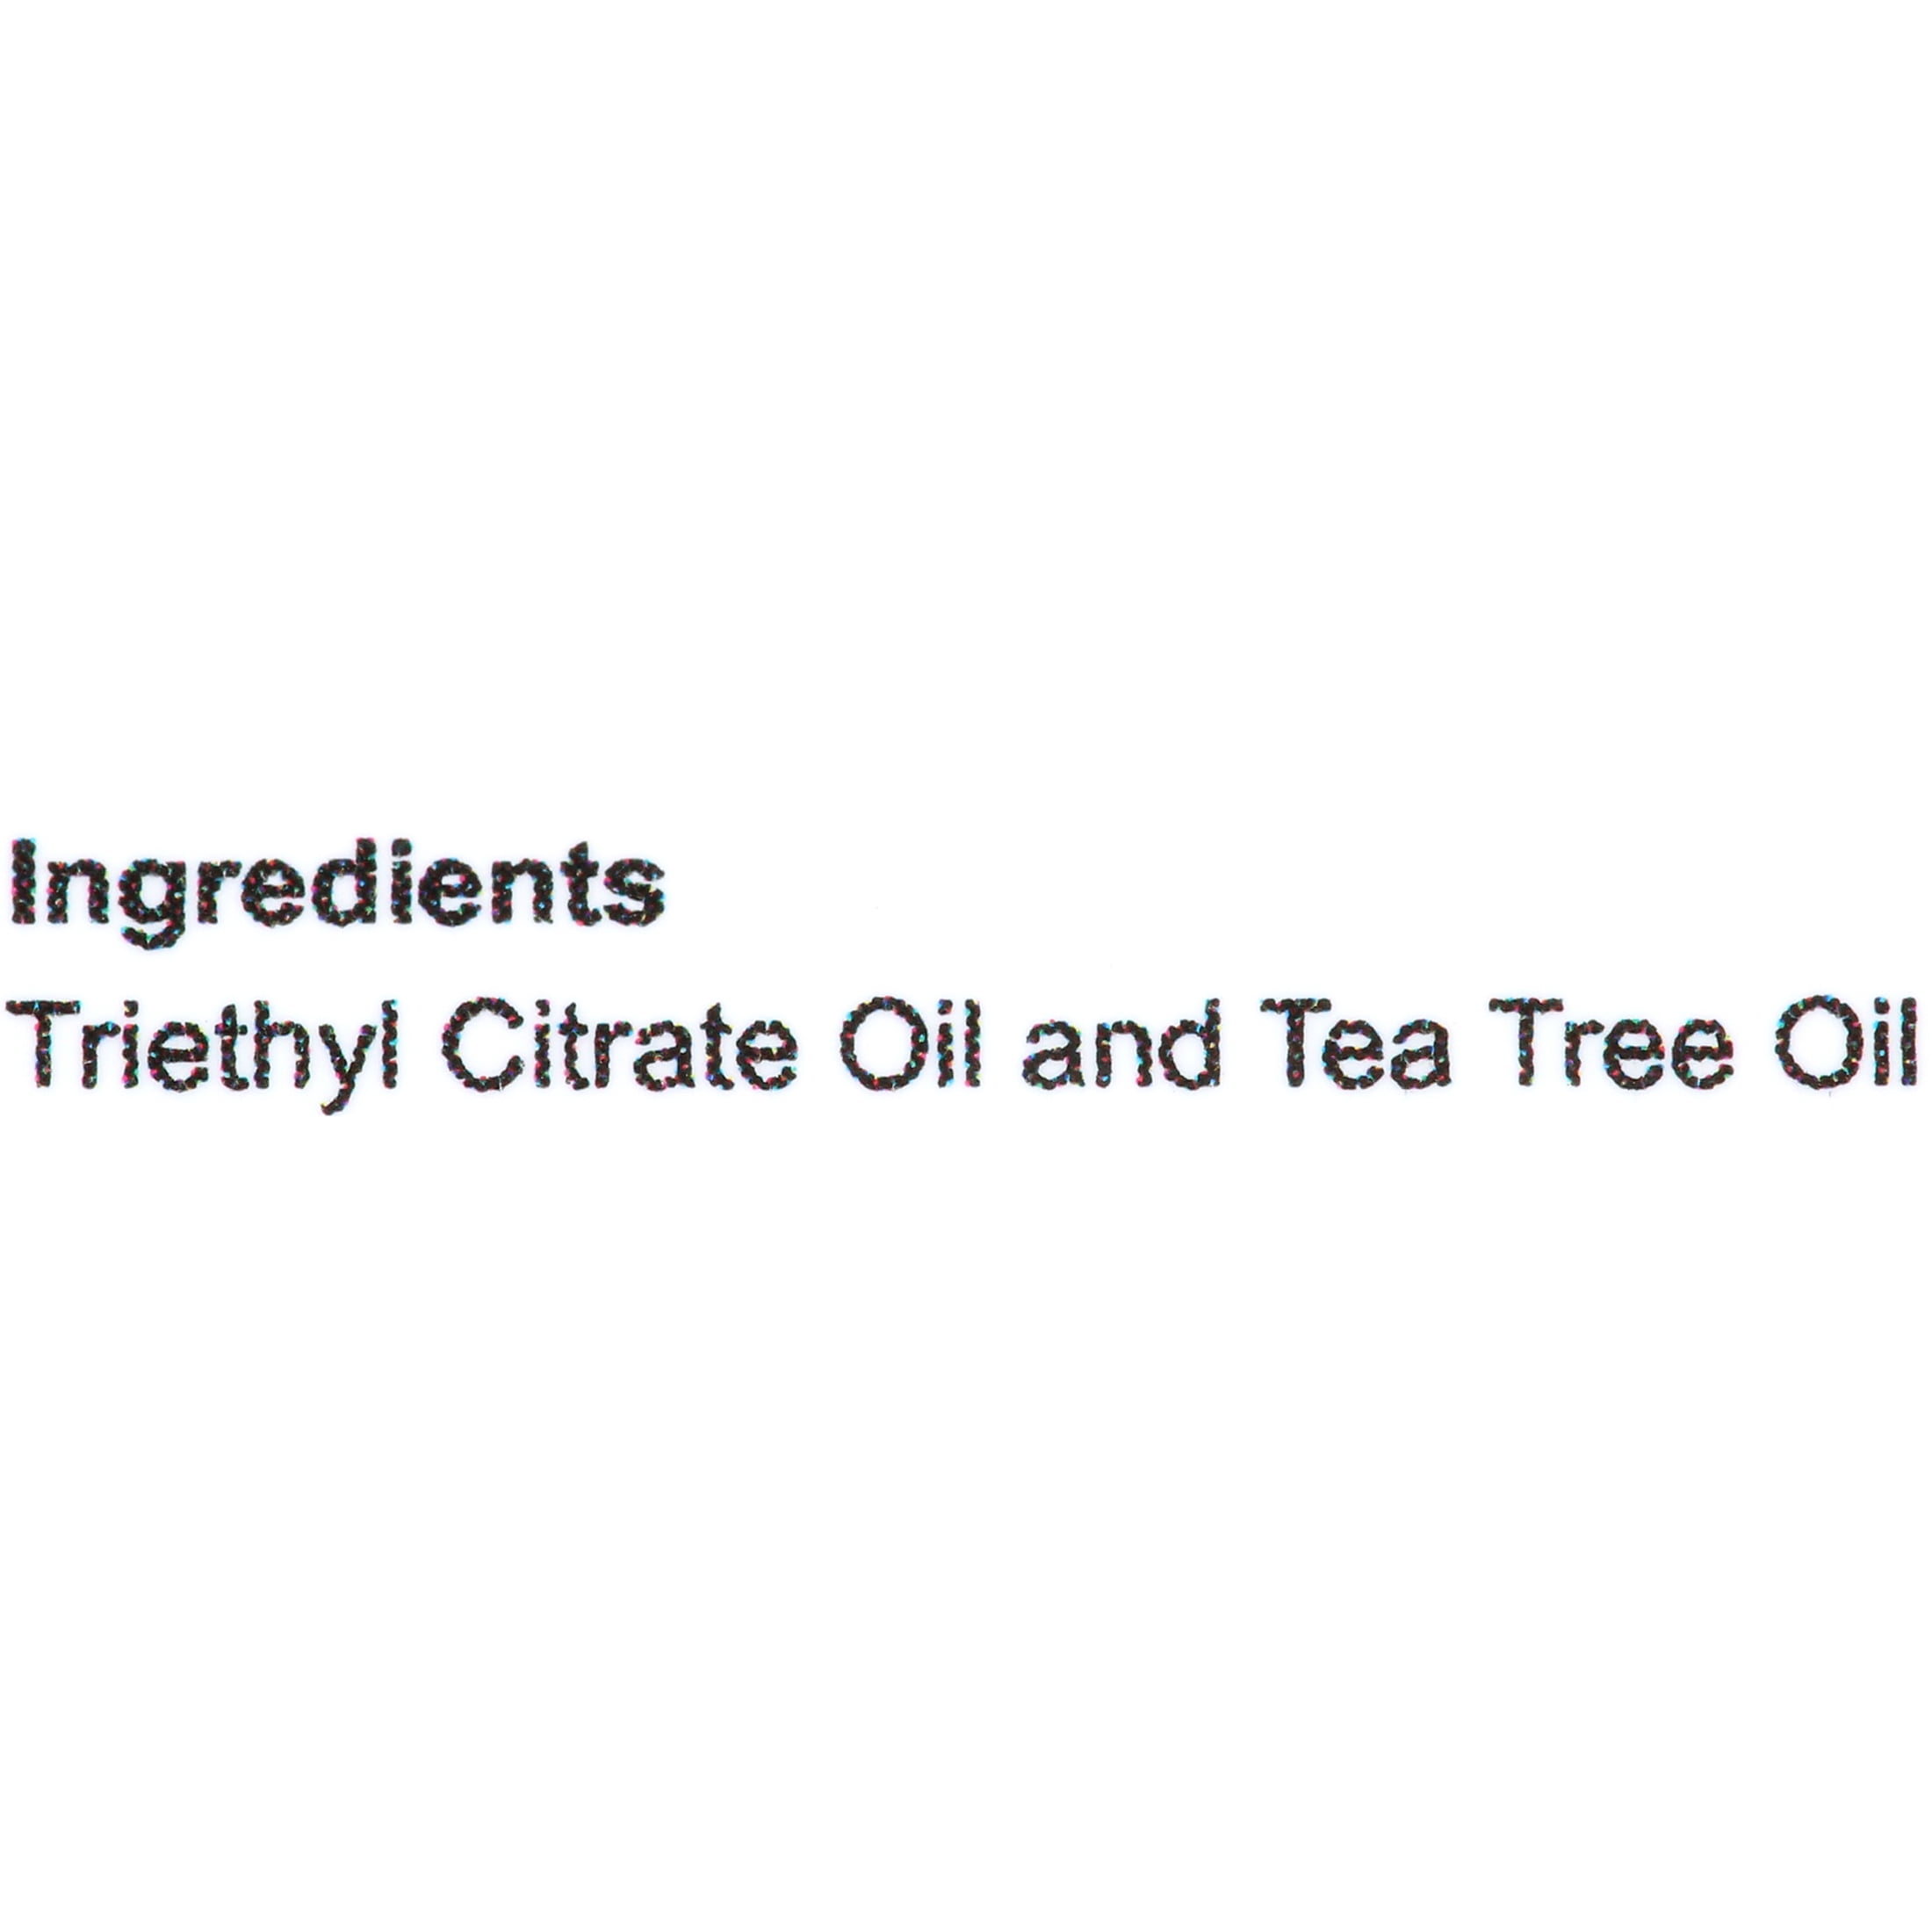 Bulk Tea Tree AAA Essential Oil - 16 Oz Tea Tree Essential Oil - 100% Pure  & Undiluted Essential Oil - 1 Pound Tea Tree Oil for DIY Soaps, Candles,  and Blends - VINEVIDA 